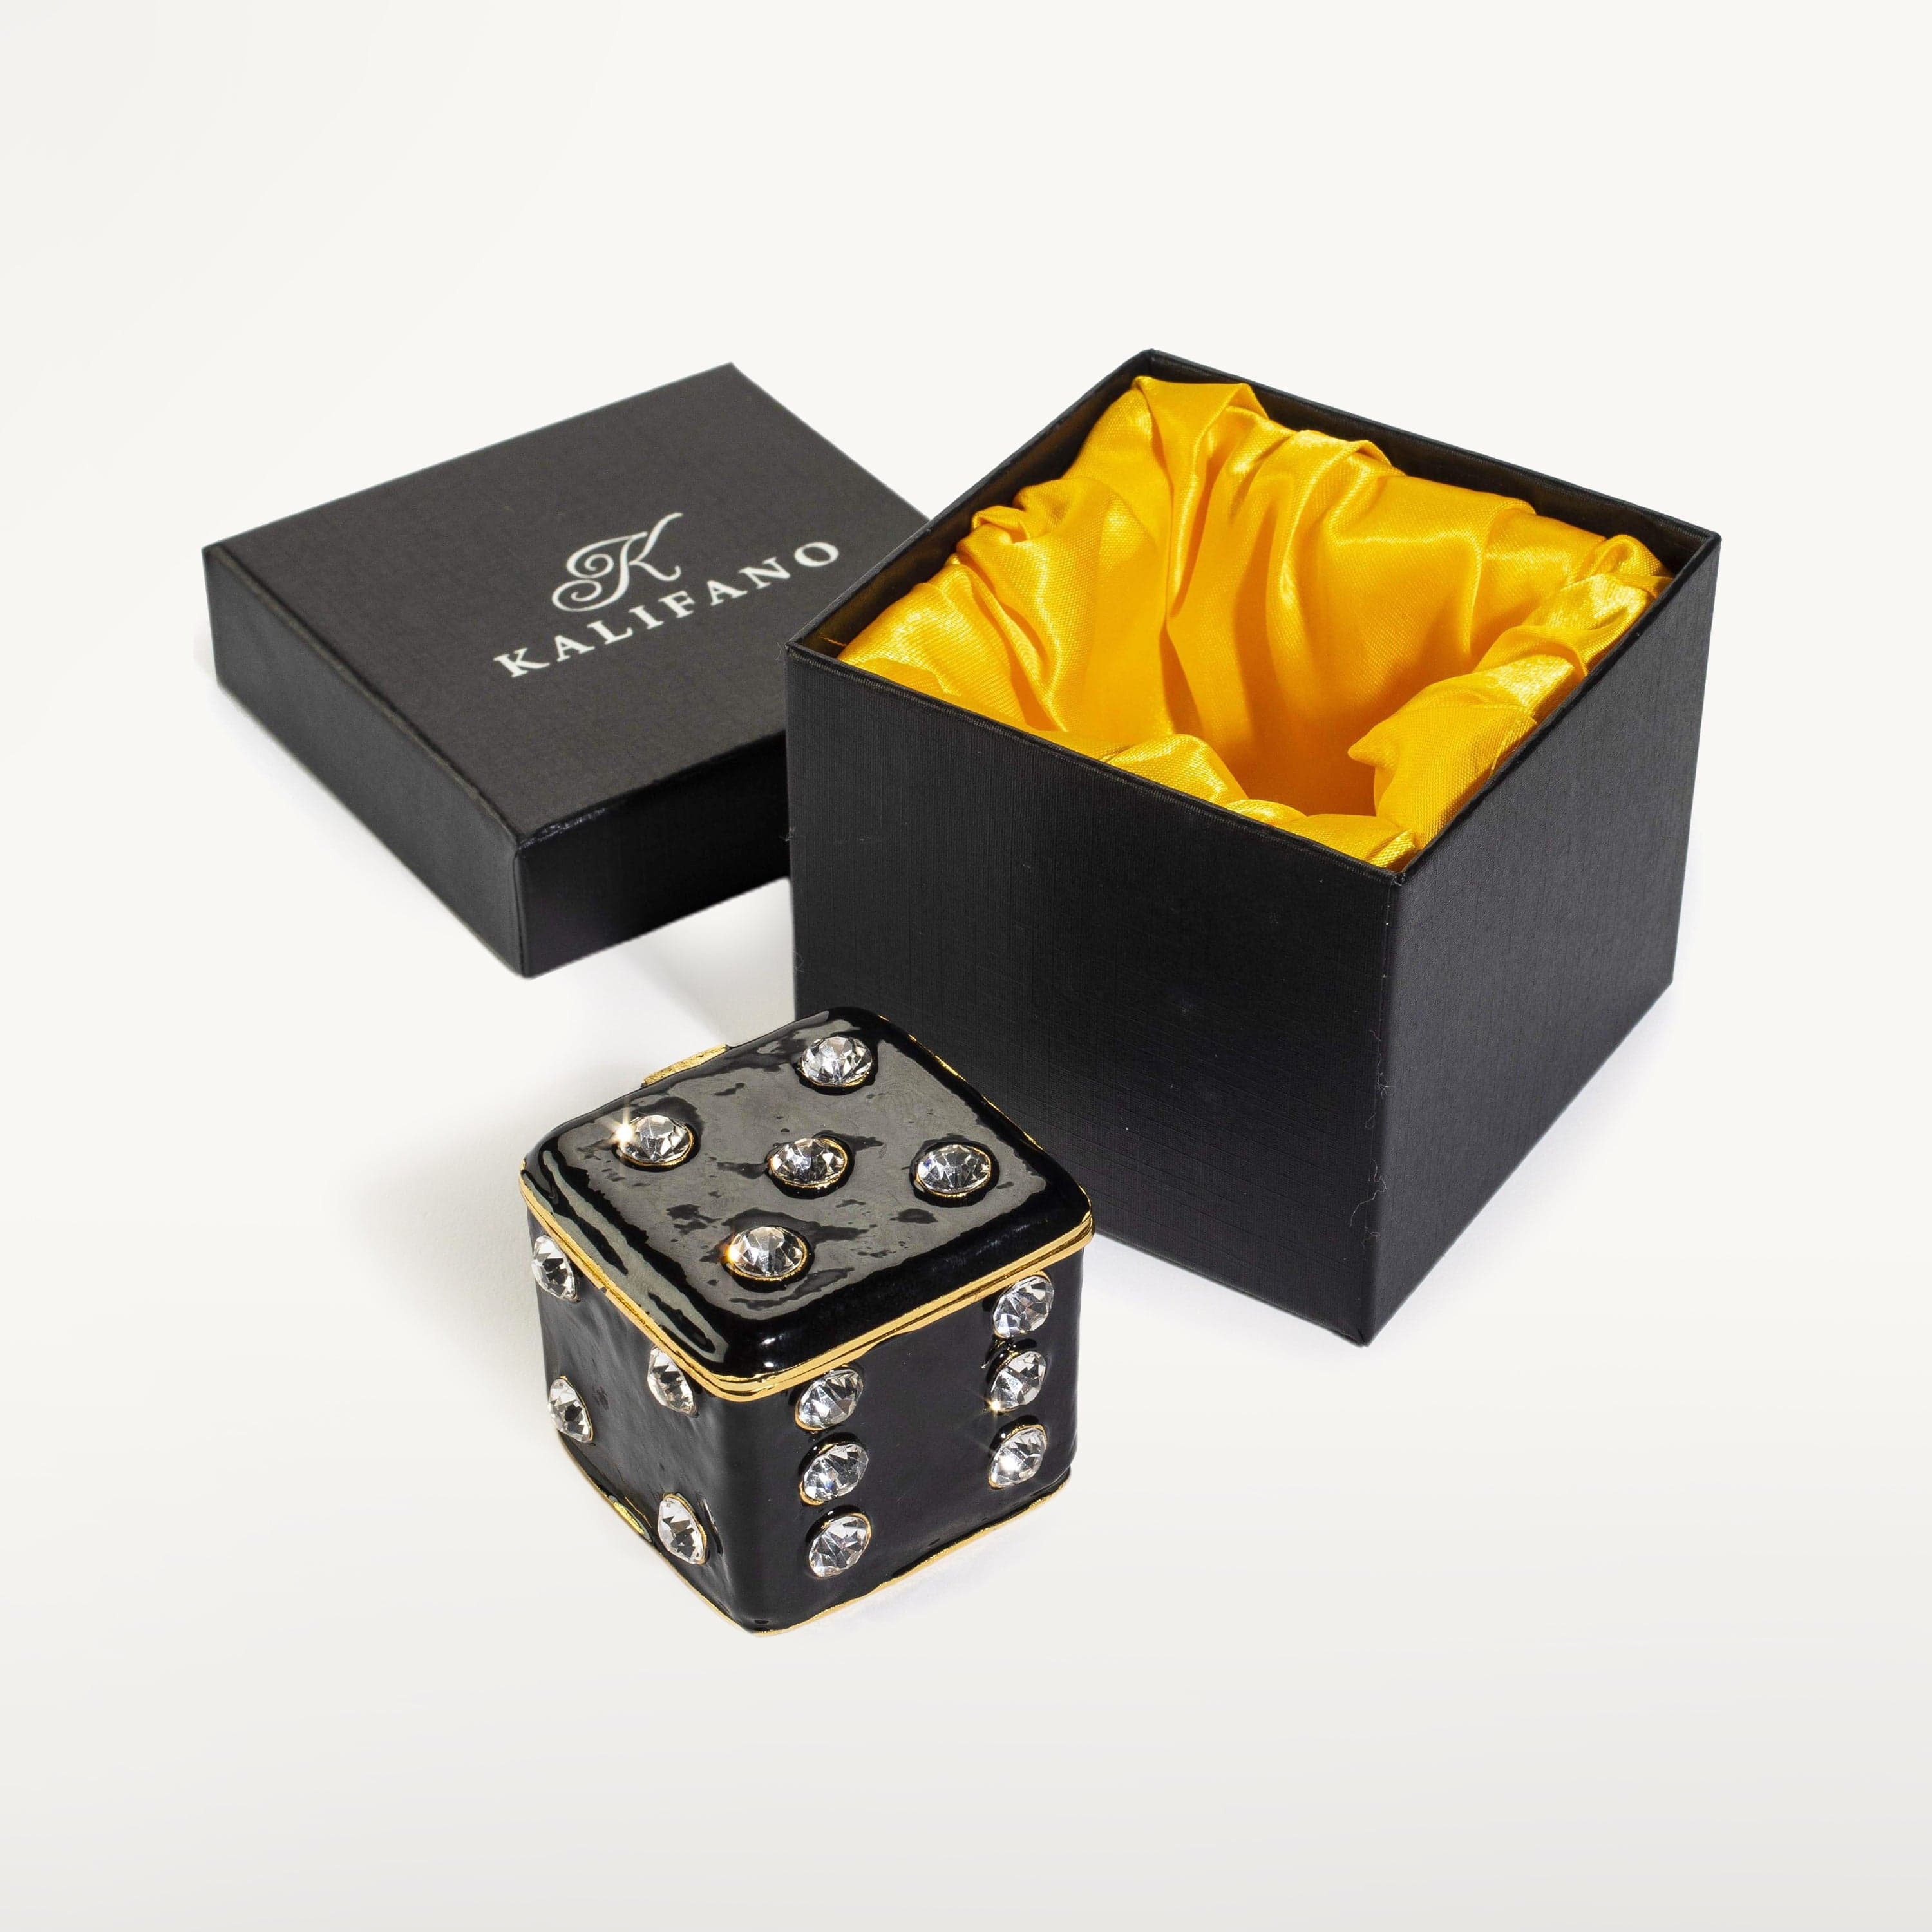 Kalifano Vanity Figurine Dice Figurine Keepsake Box made with Crystals SVA-109